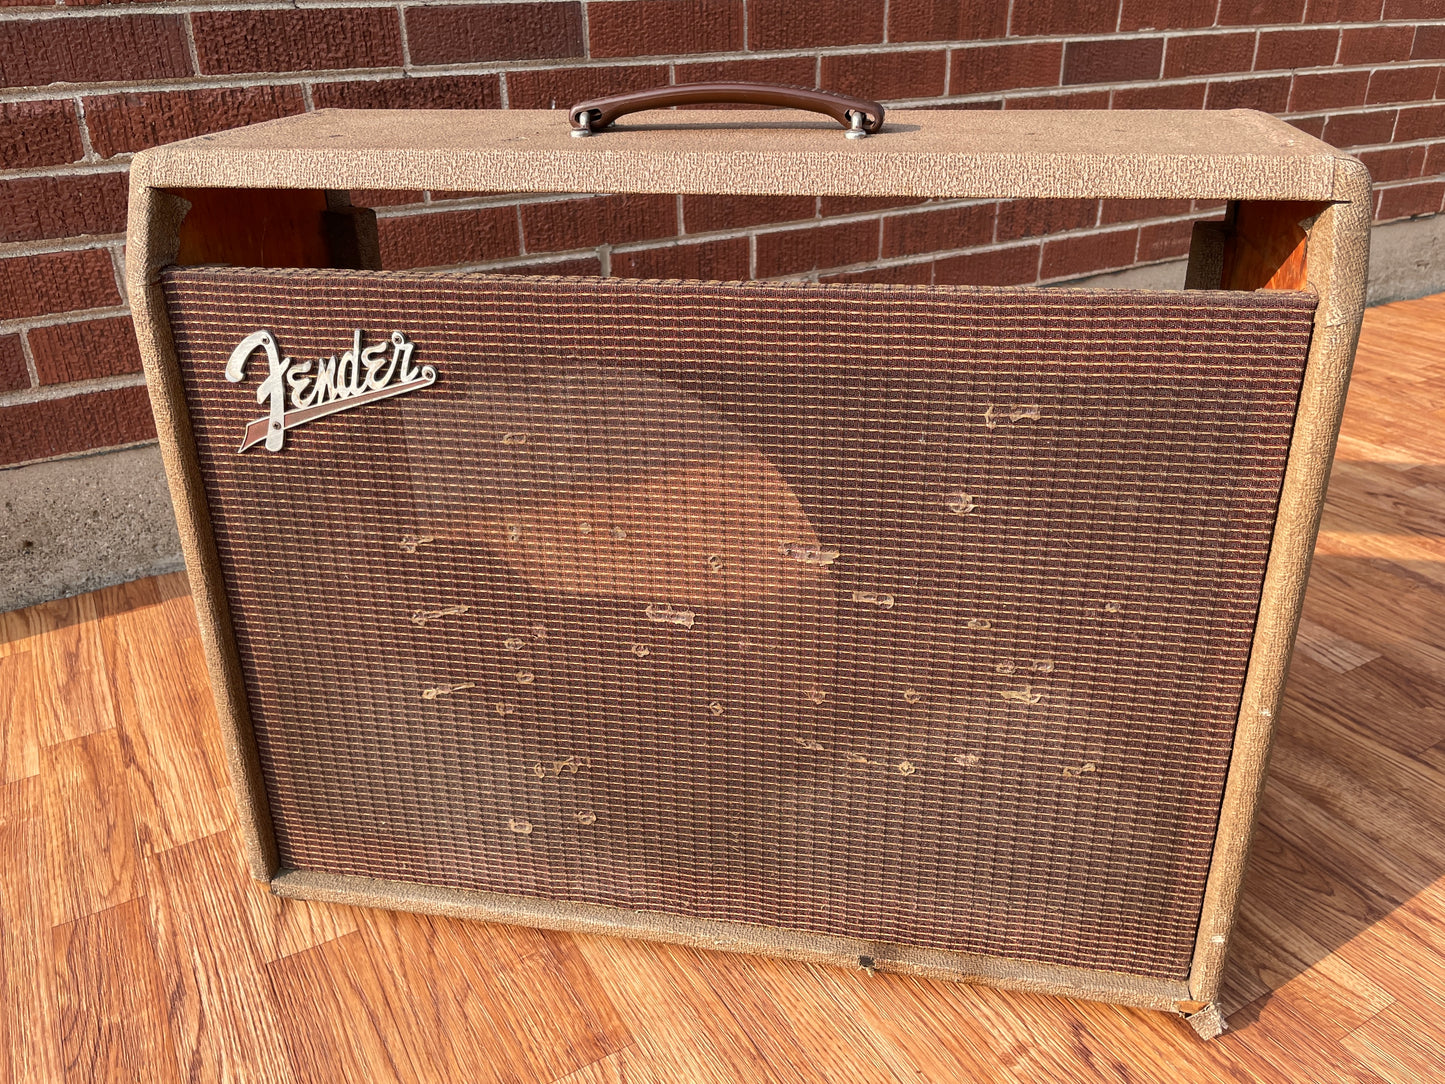 1959 Fender Vibrasonic Combo Amplifier Brown Tolex Cabinet Model 5G13 Label